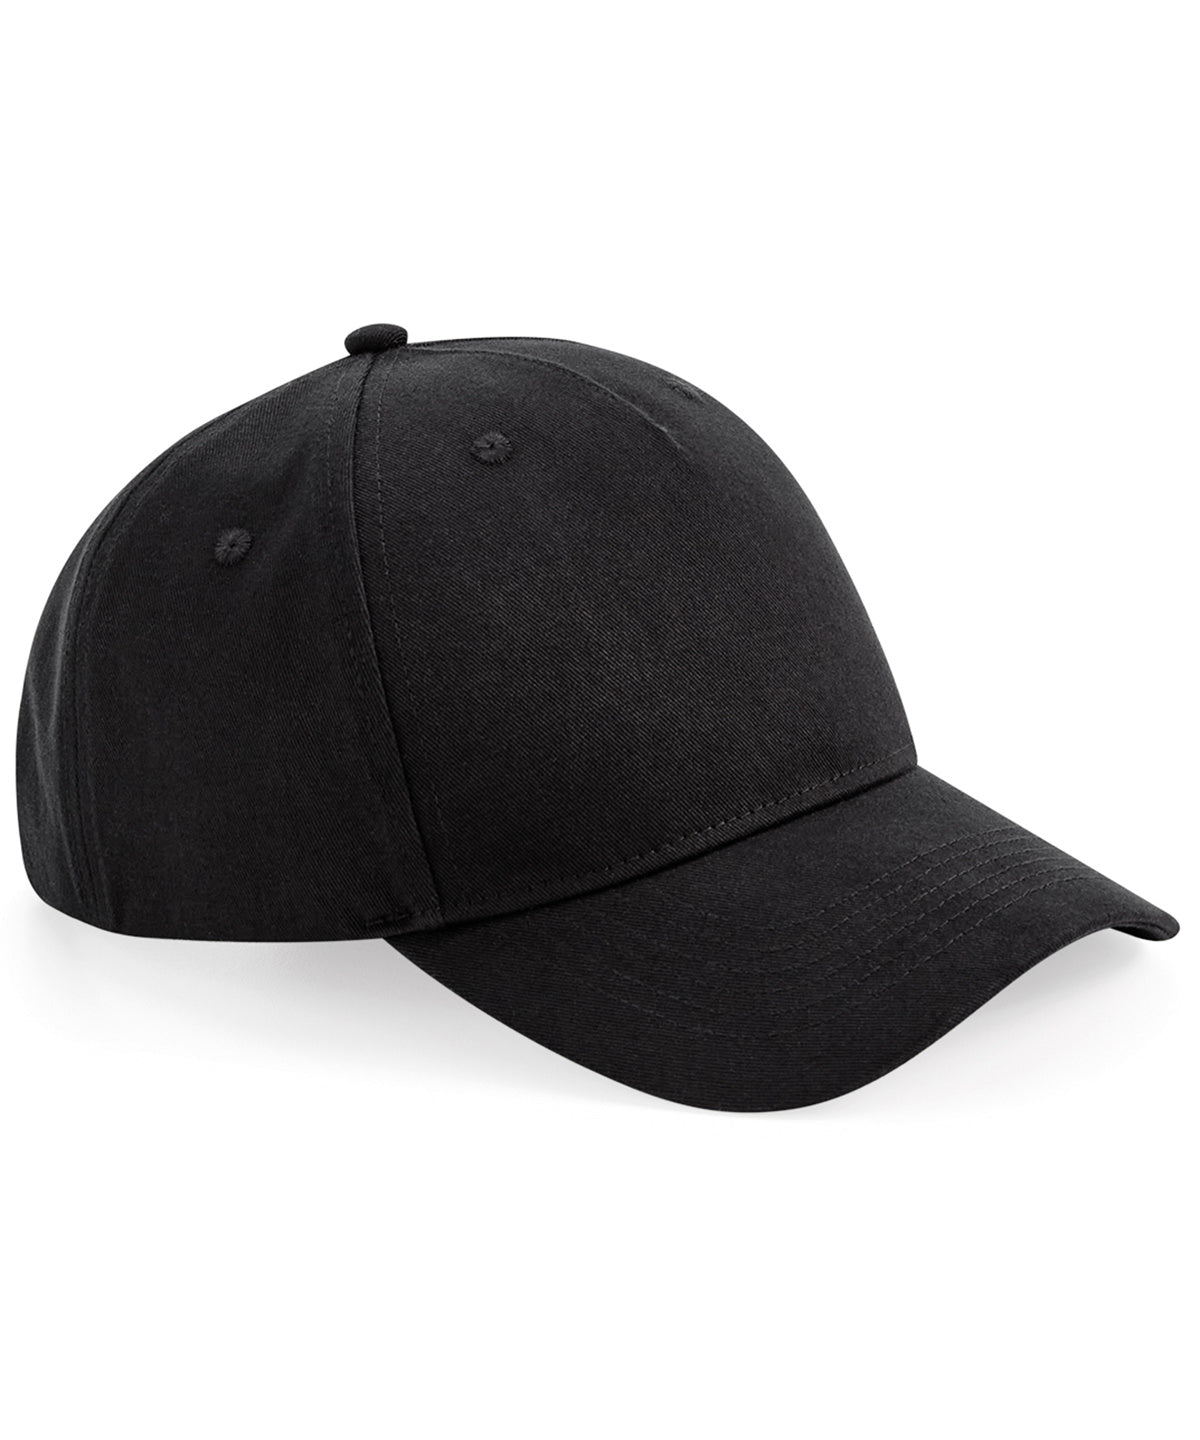 Personalised Caps - Black Beechfield Organic cotton 5-panel cap